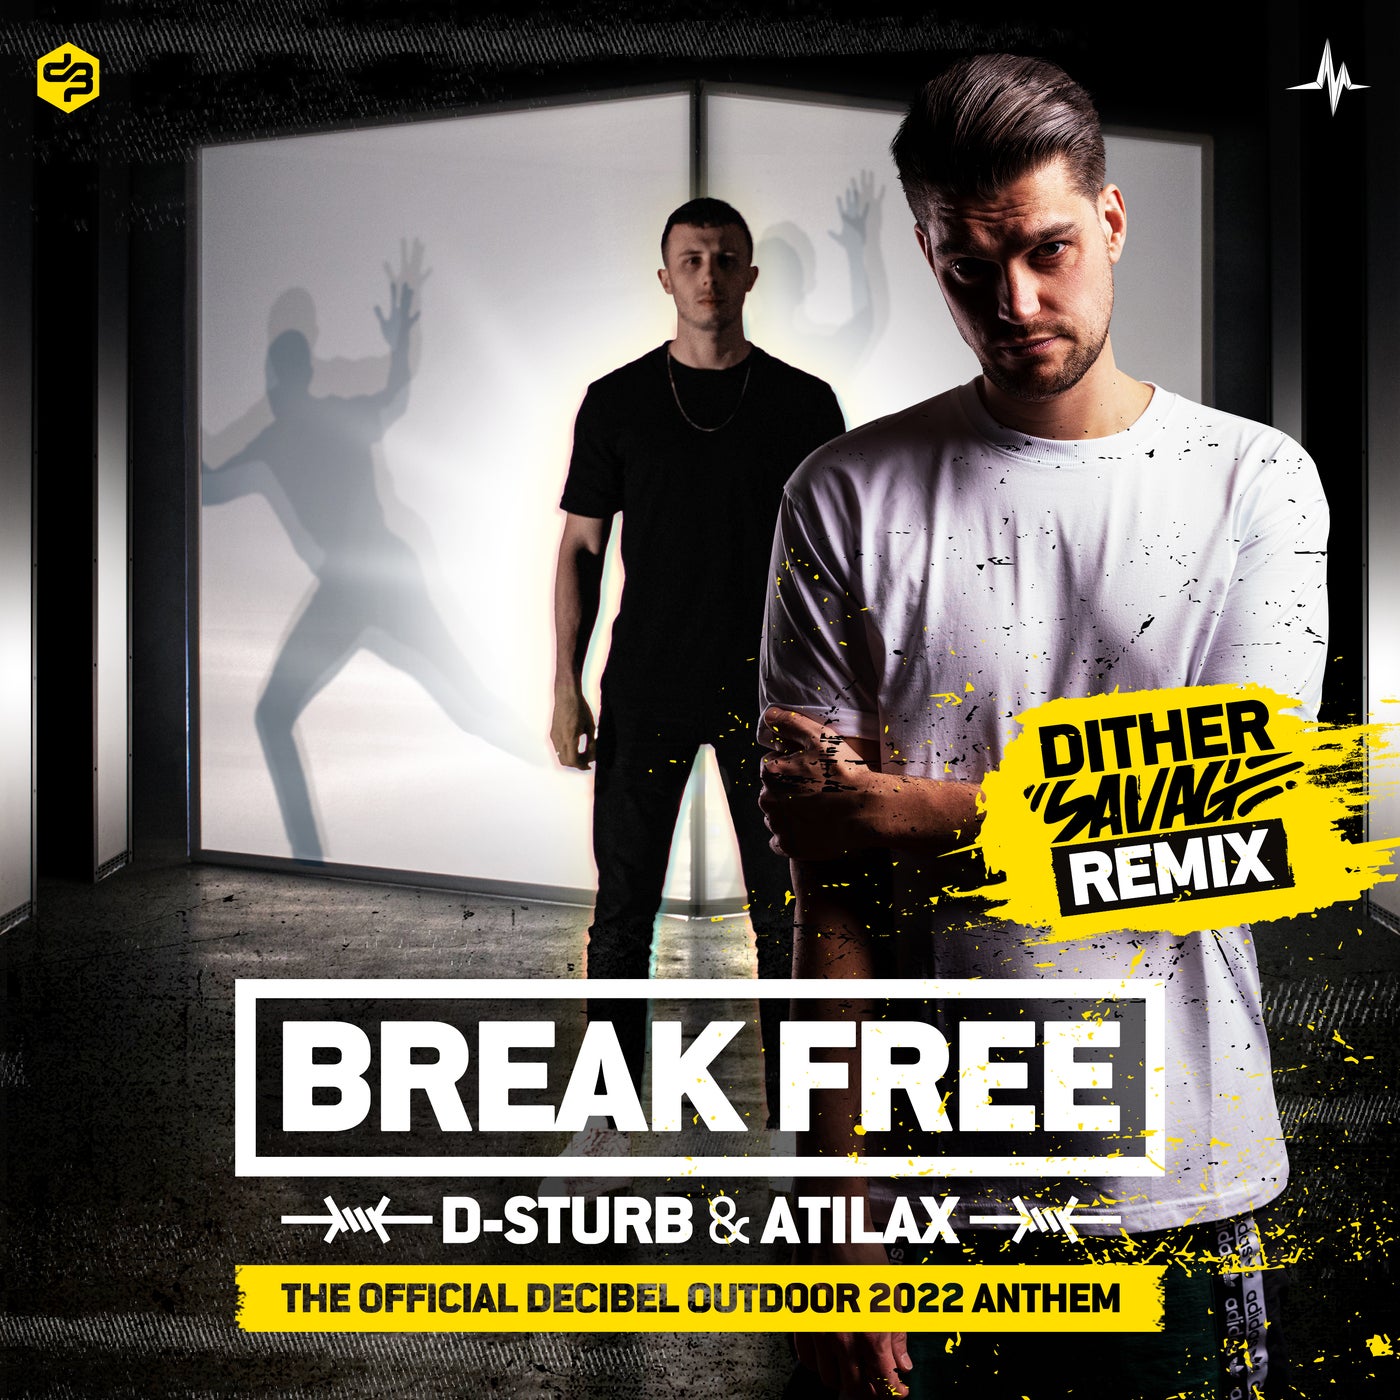 Break Free (Official Decibel Outdoor 2022 Anthem) - Dither Savage Remix